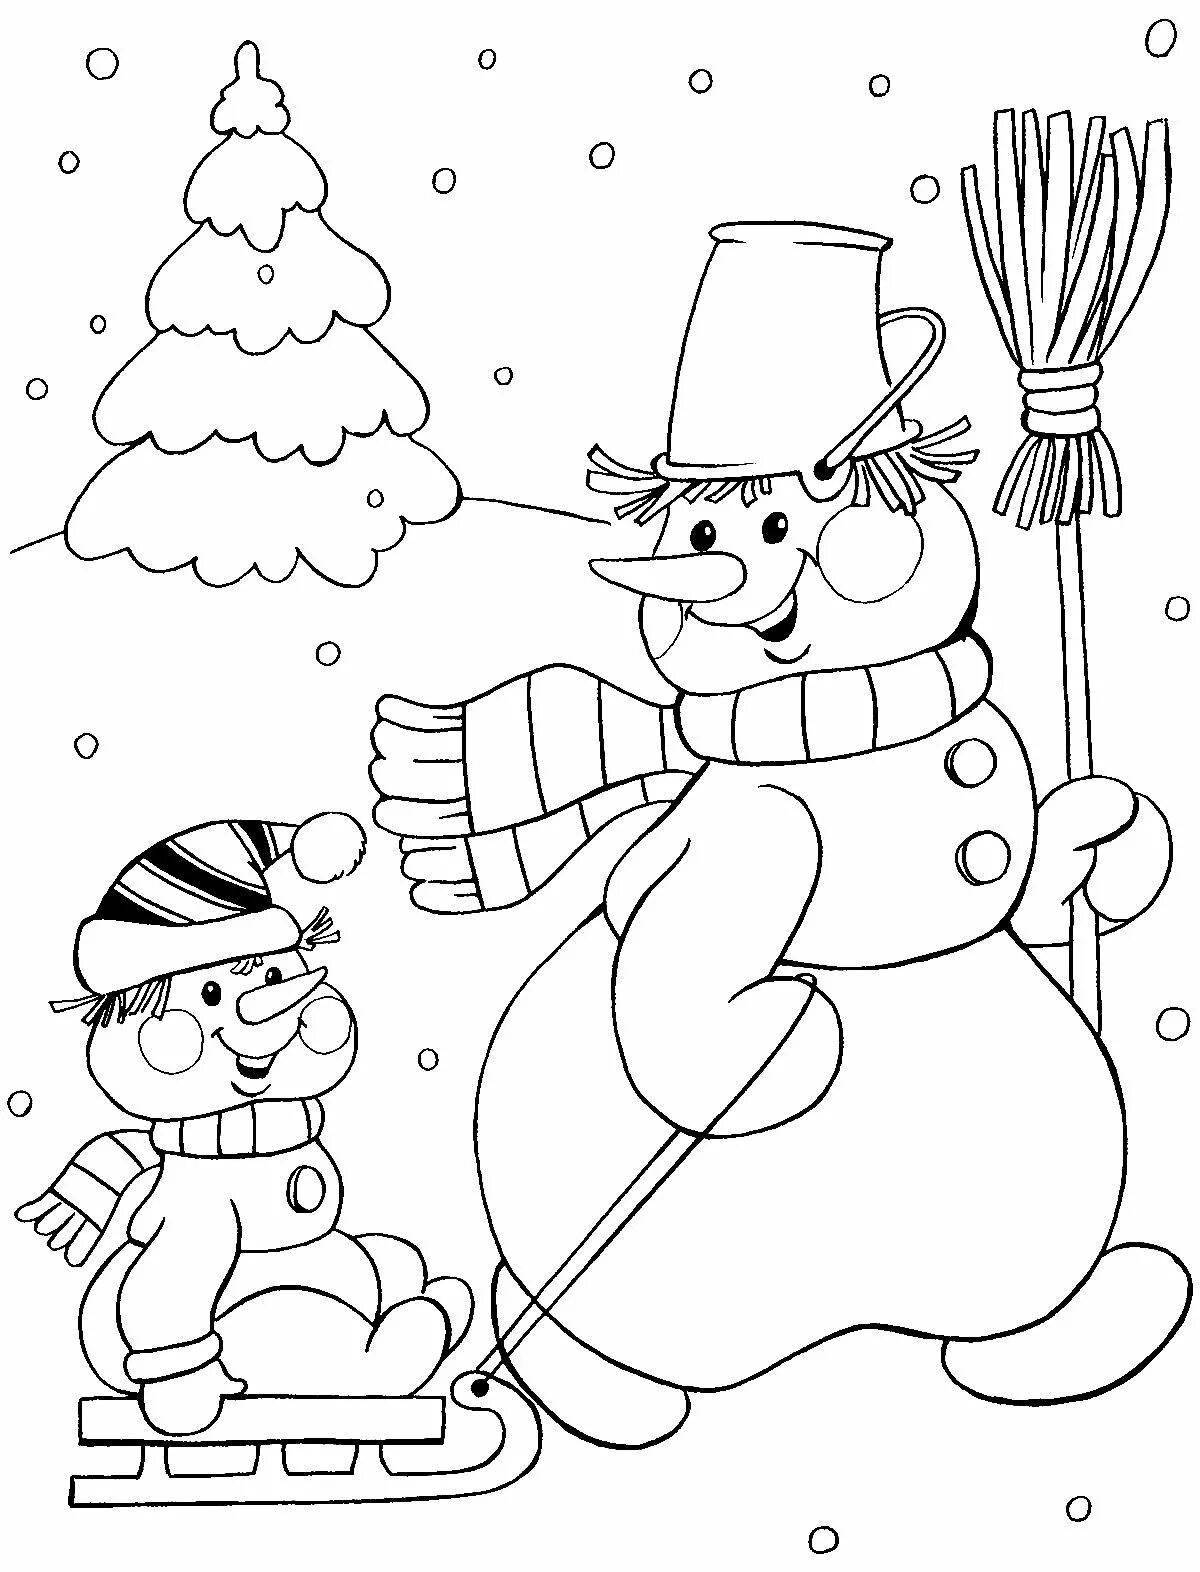 Fun winter coloring for kids